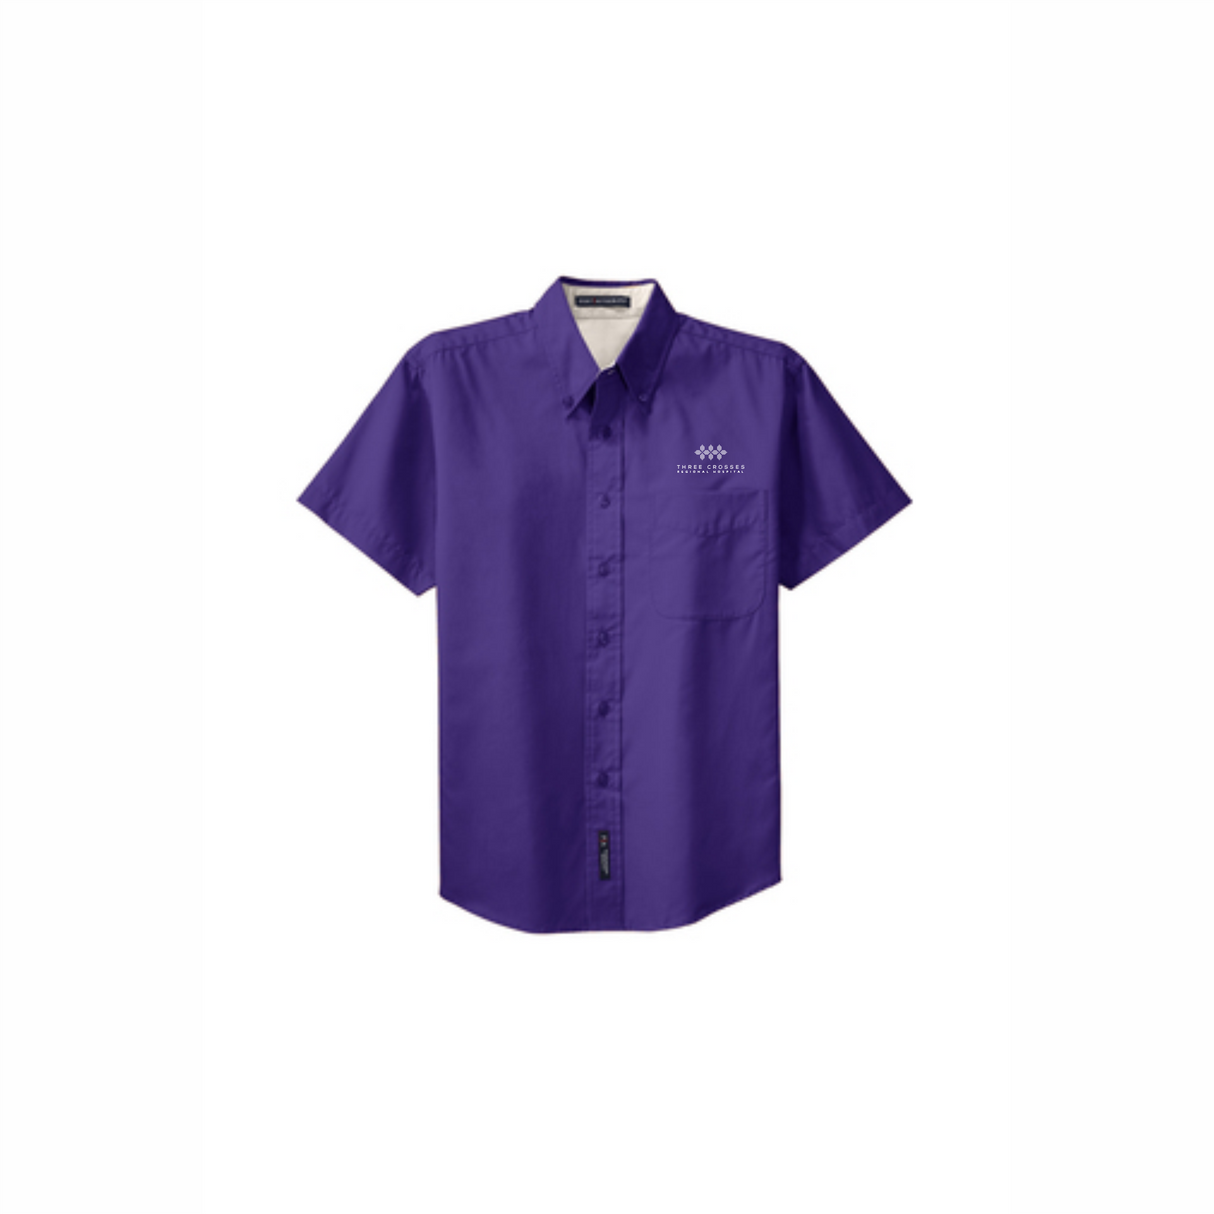 Three Crosses Hospital Short-Sleeve Dress Shirt